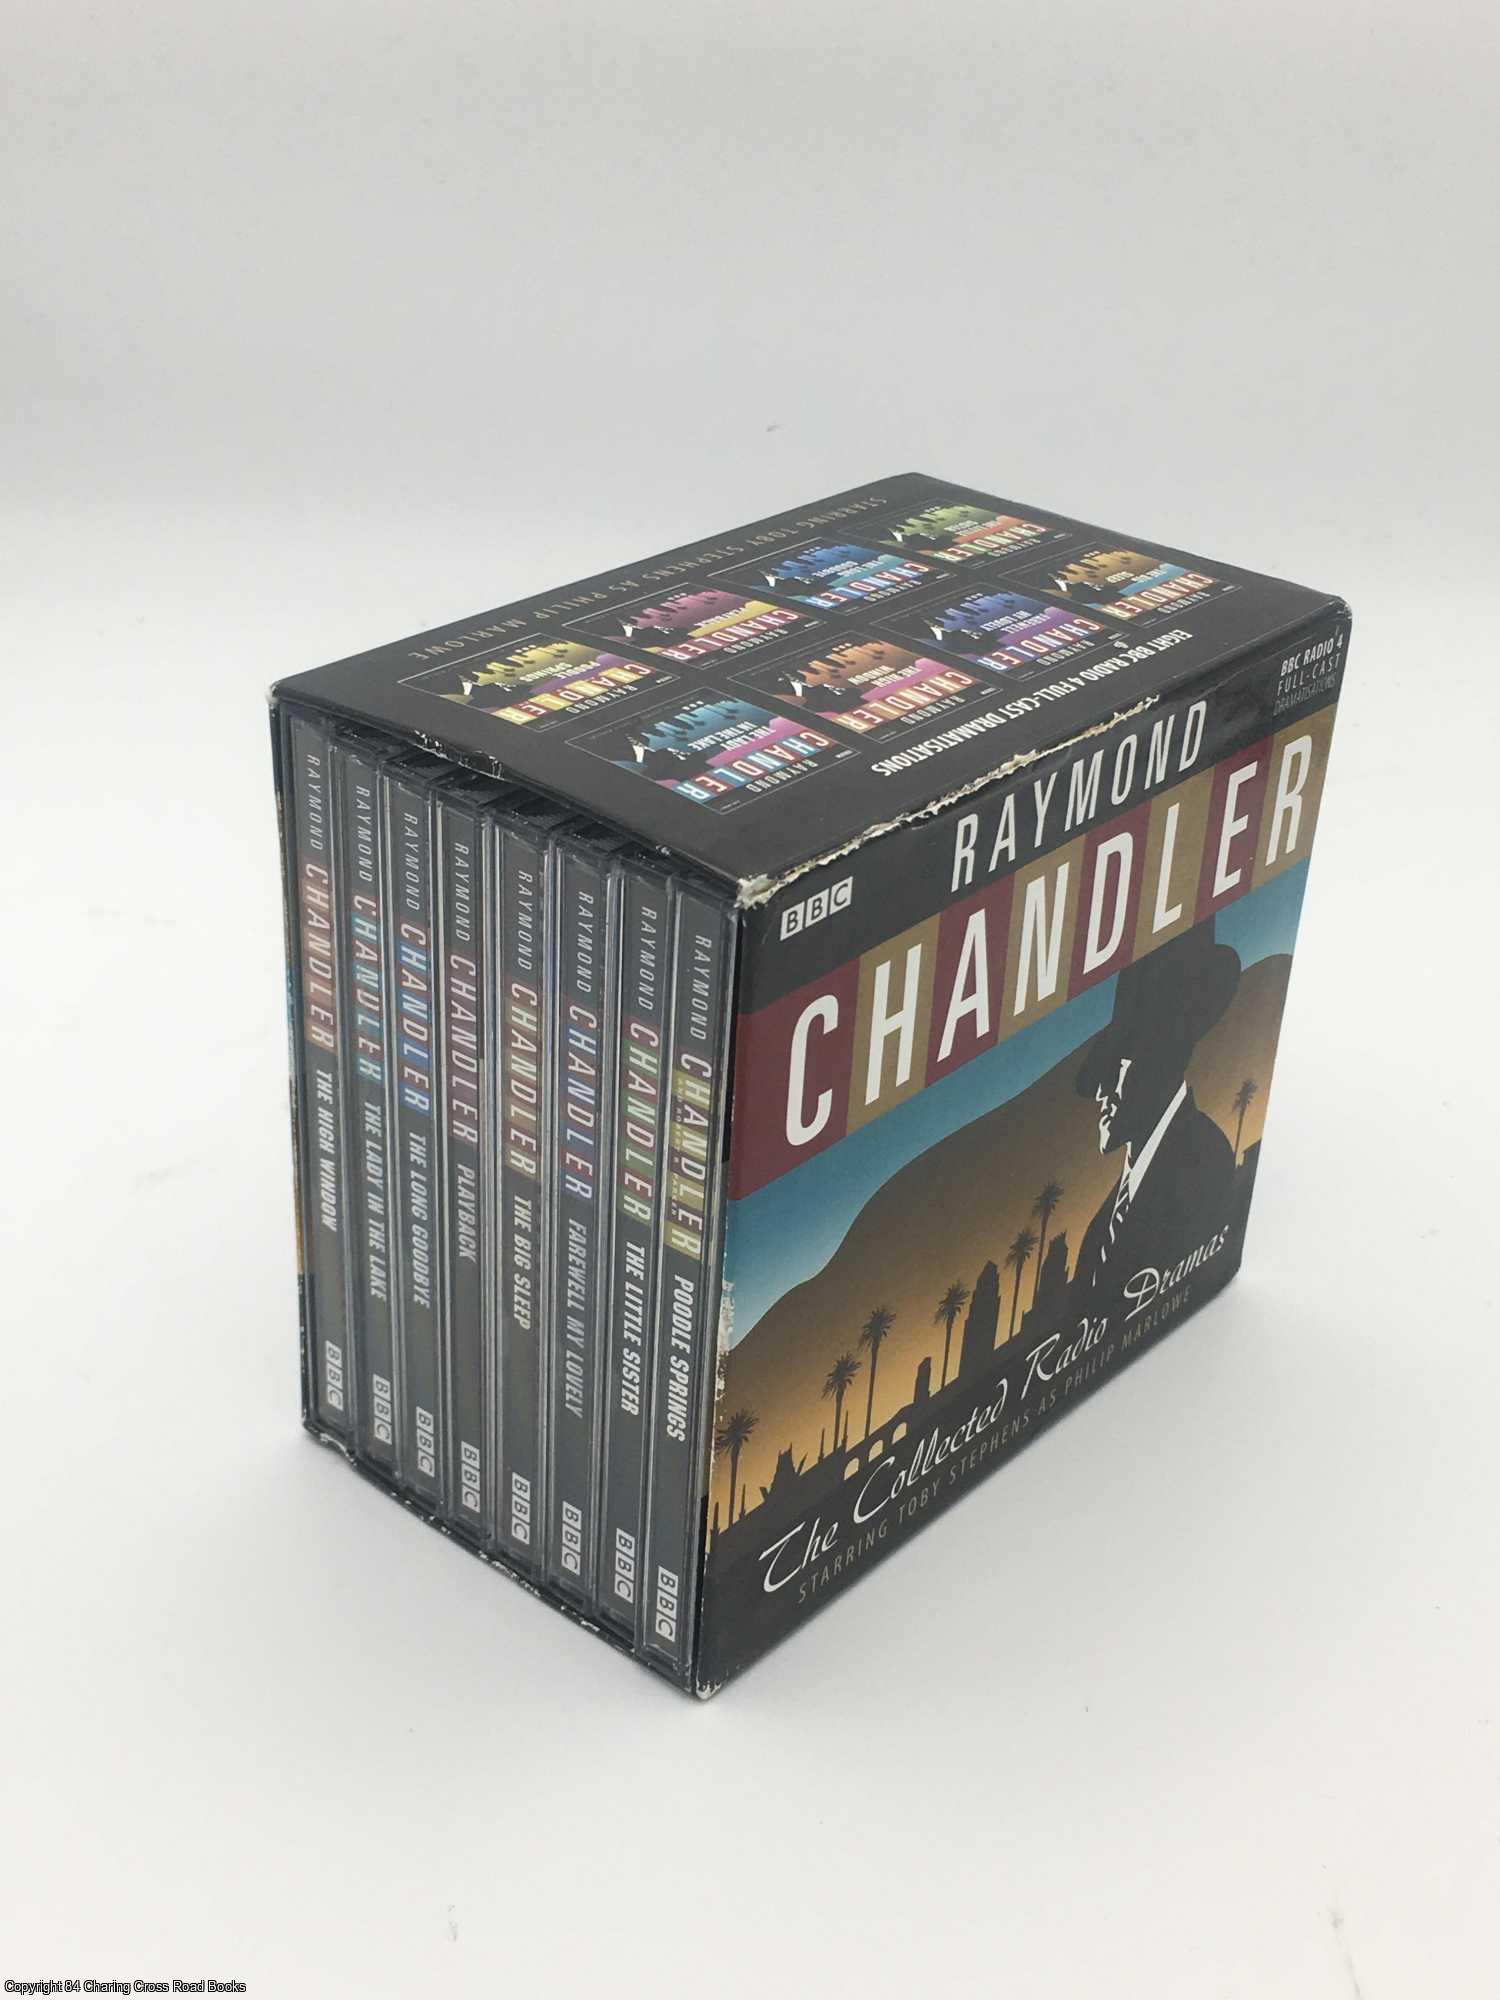 Chandler, Raymond - The Collected Radio Dramas: BBC Radio 4 Full-Cast Dramatisations